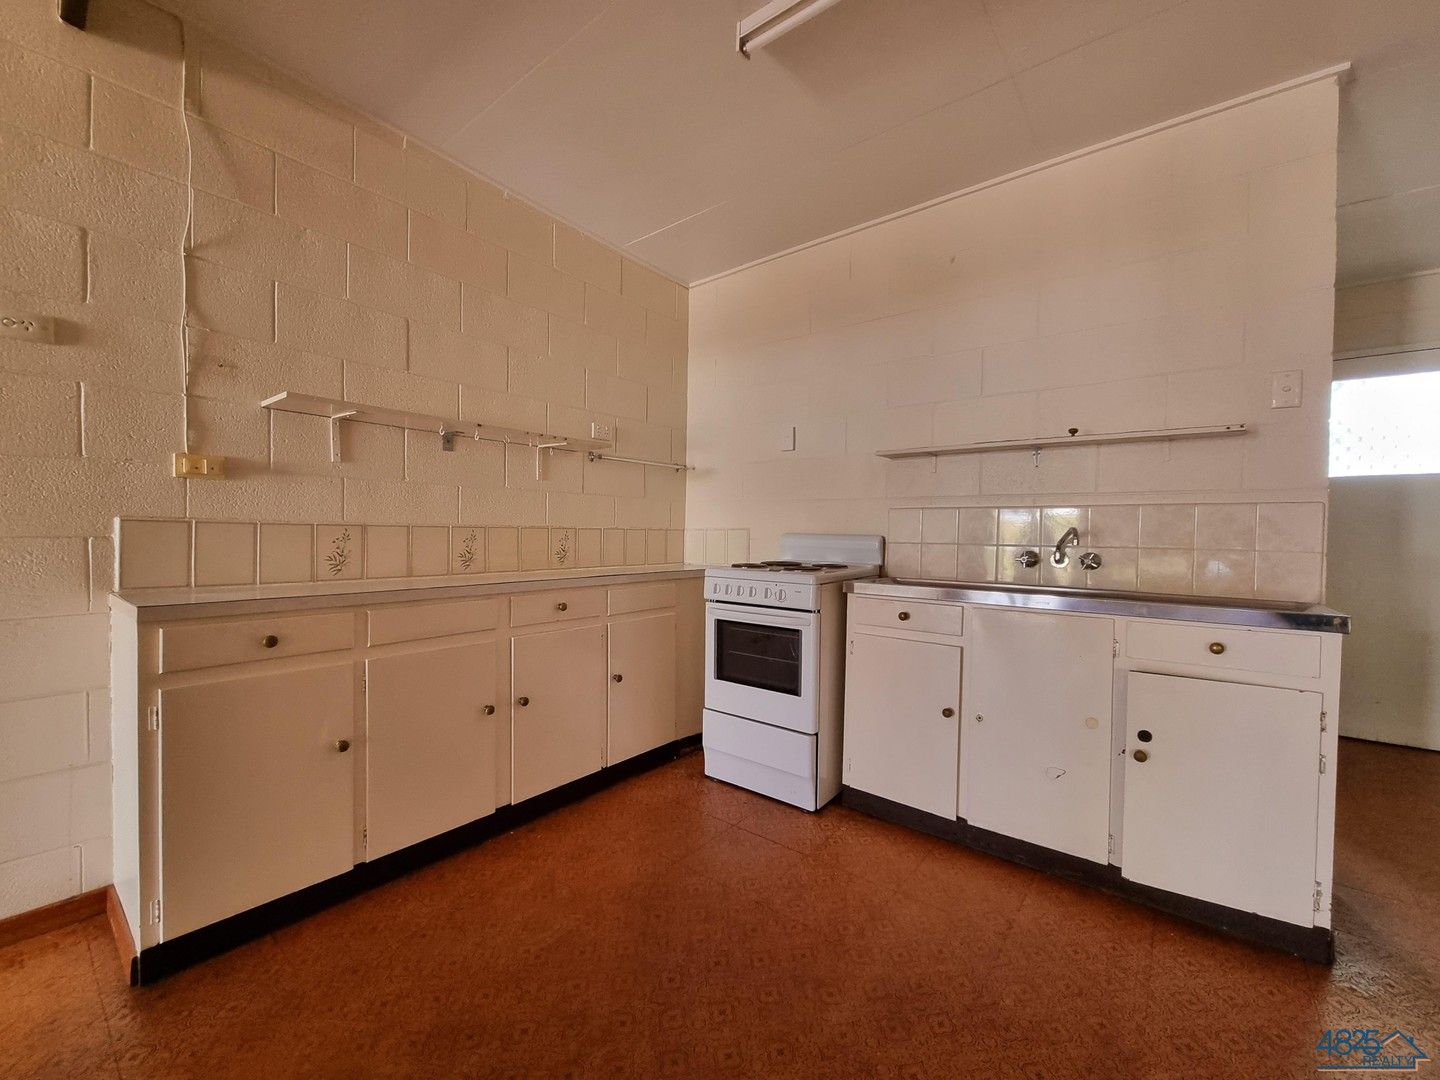 2 bedrooms Apartment / Unit / Flat in 1/21 Elizabeth Street MOUNT ISA QLD, 4825